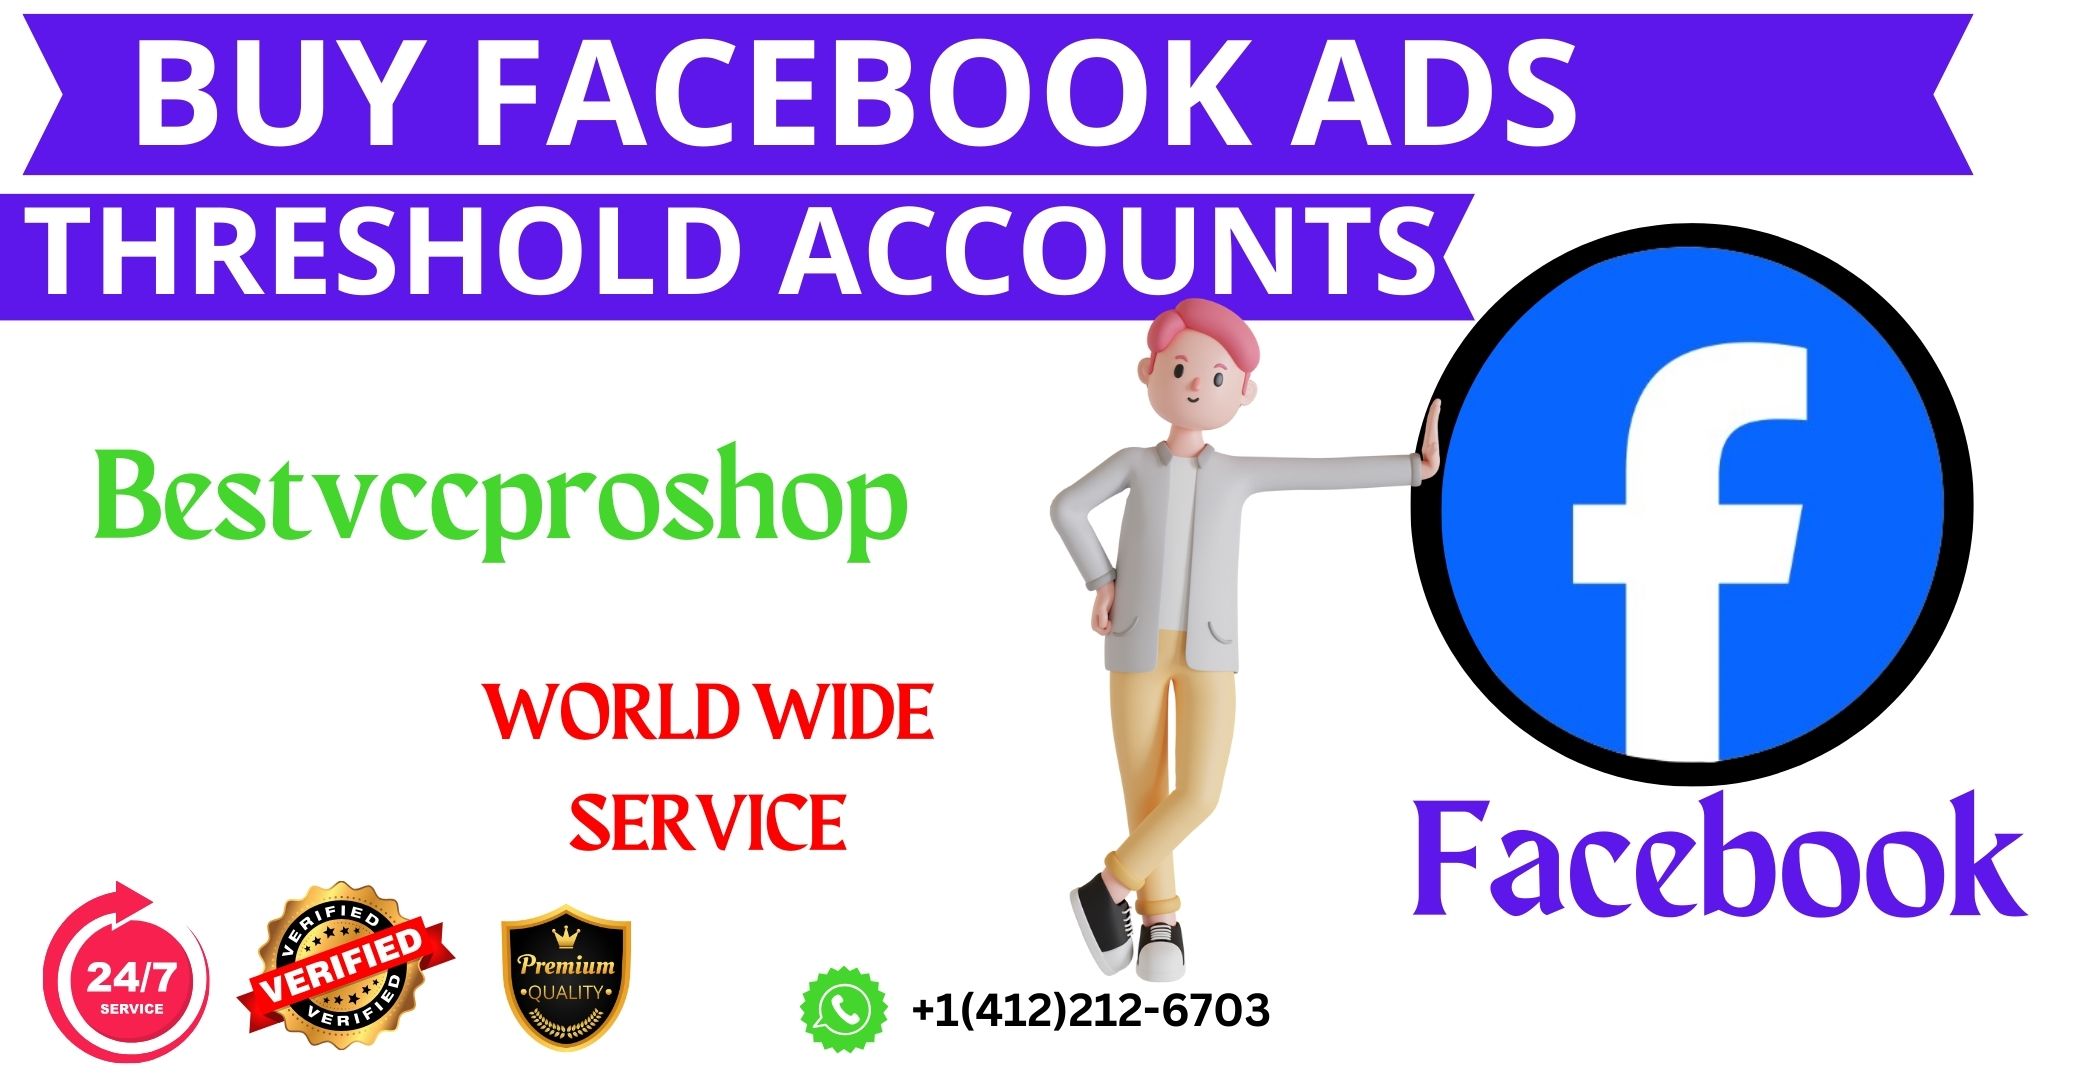 Buy-Facebook-Ads-Threshold-Accounts-1.jpg
